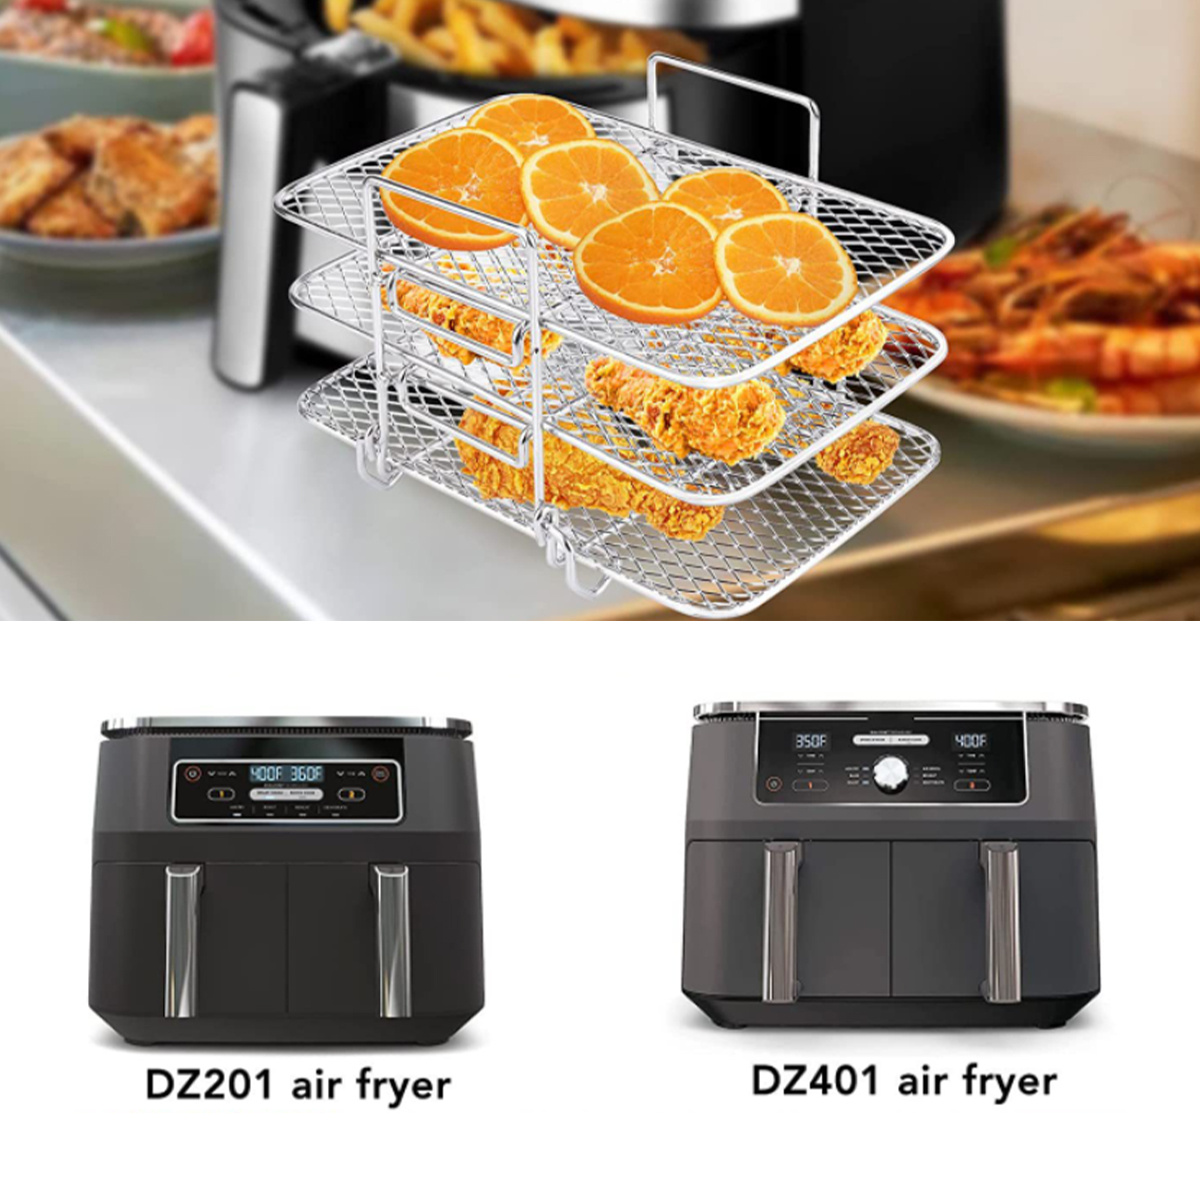 Air Fryer Rack For Dual Airfryers, Double Baskets Air Fryers Dehydrator  Racks For Ninja Foodi Dz201